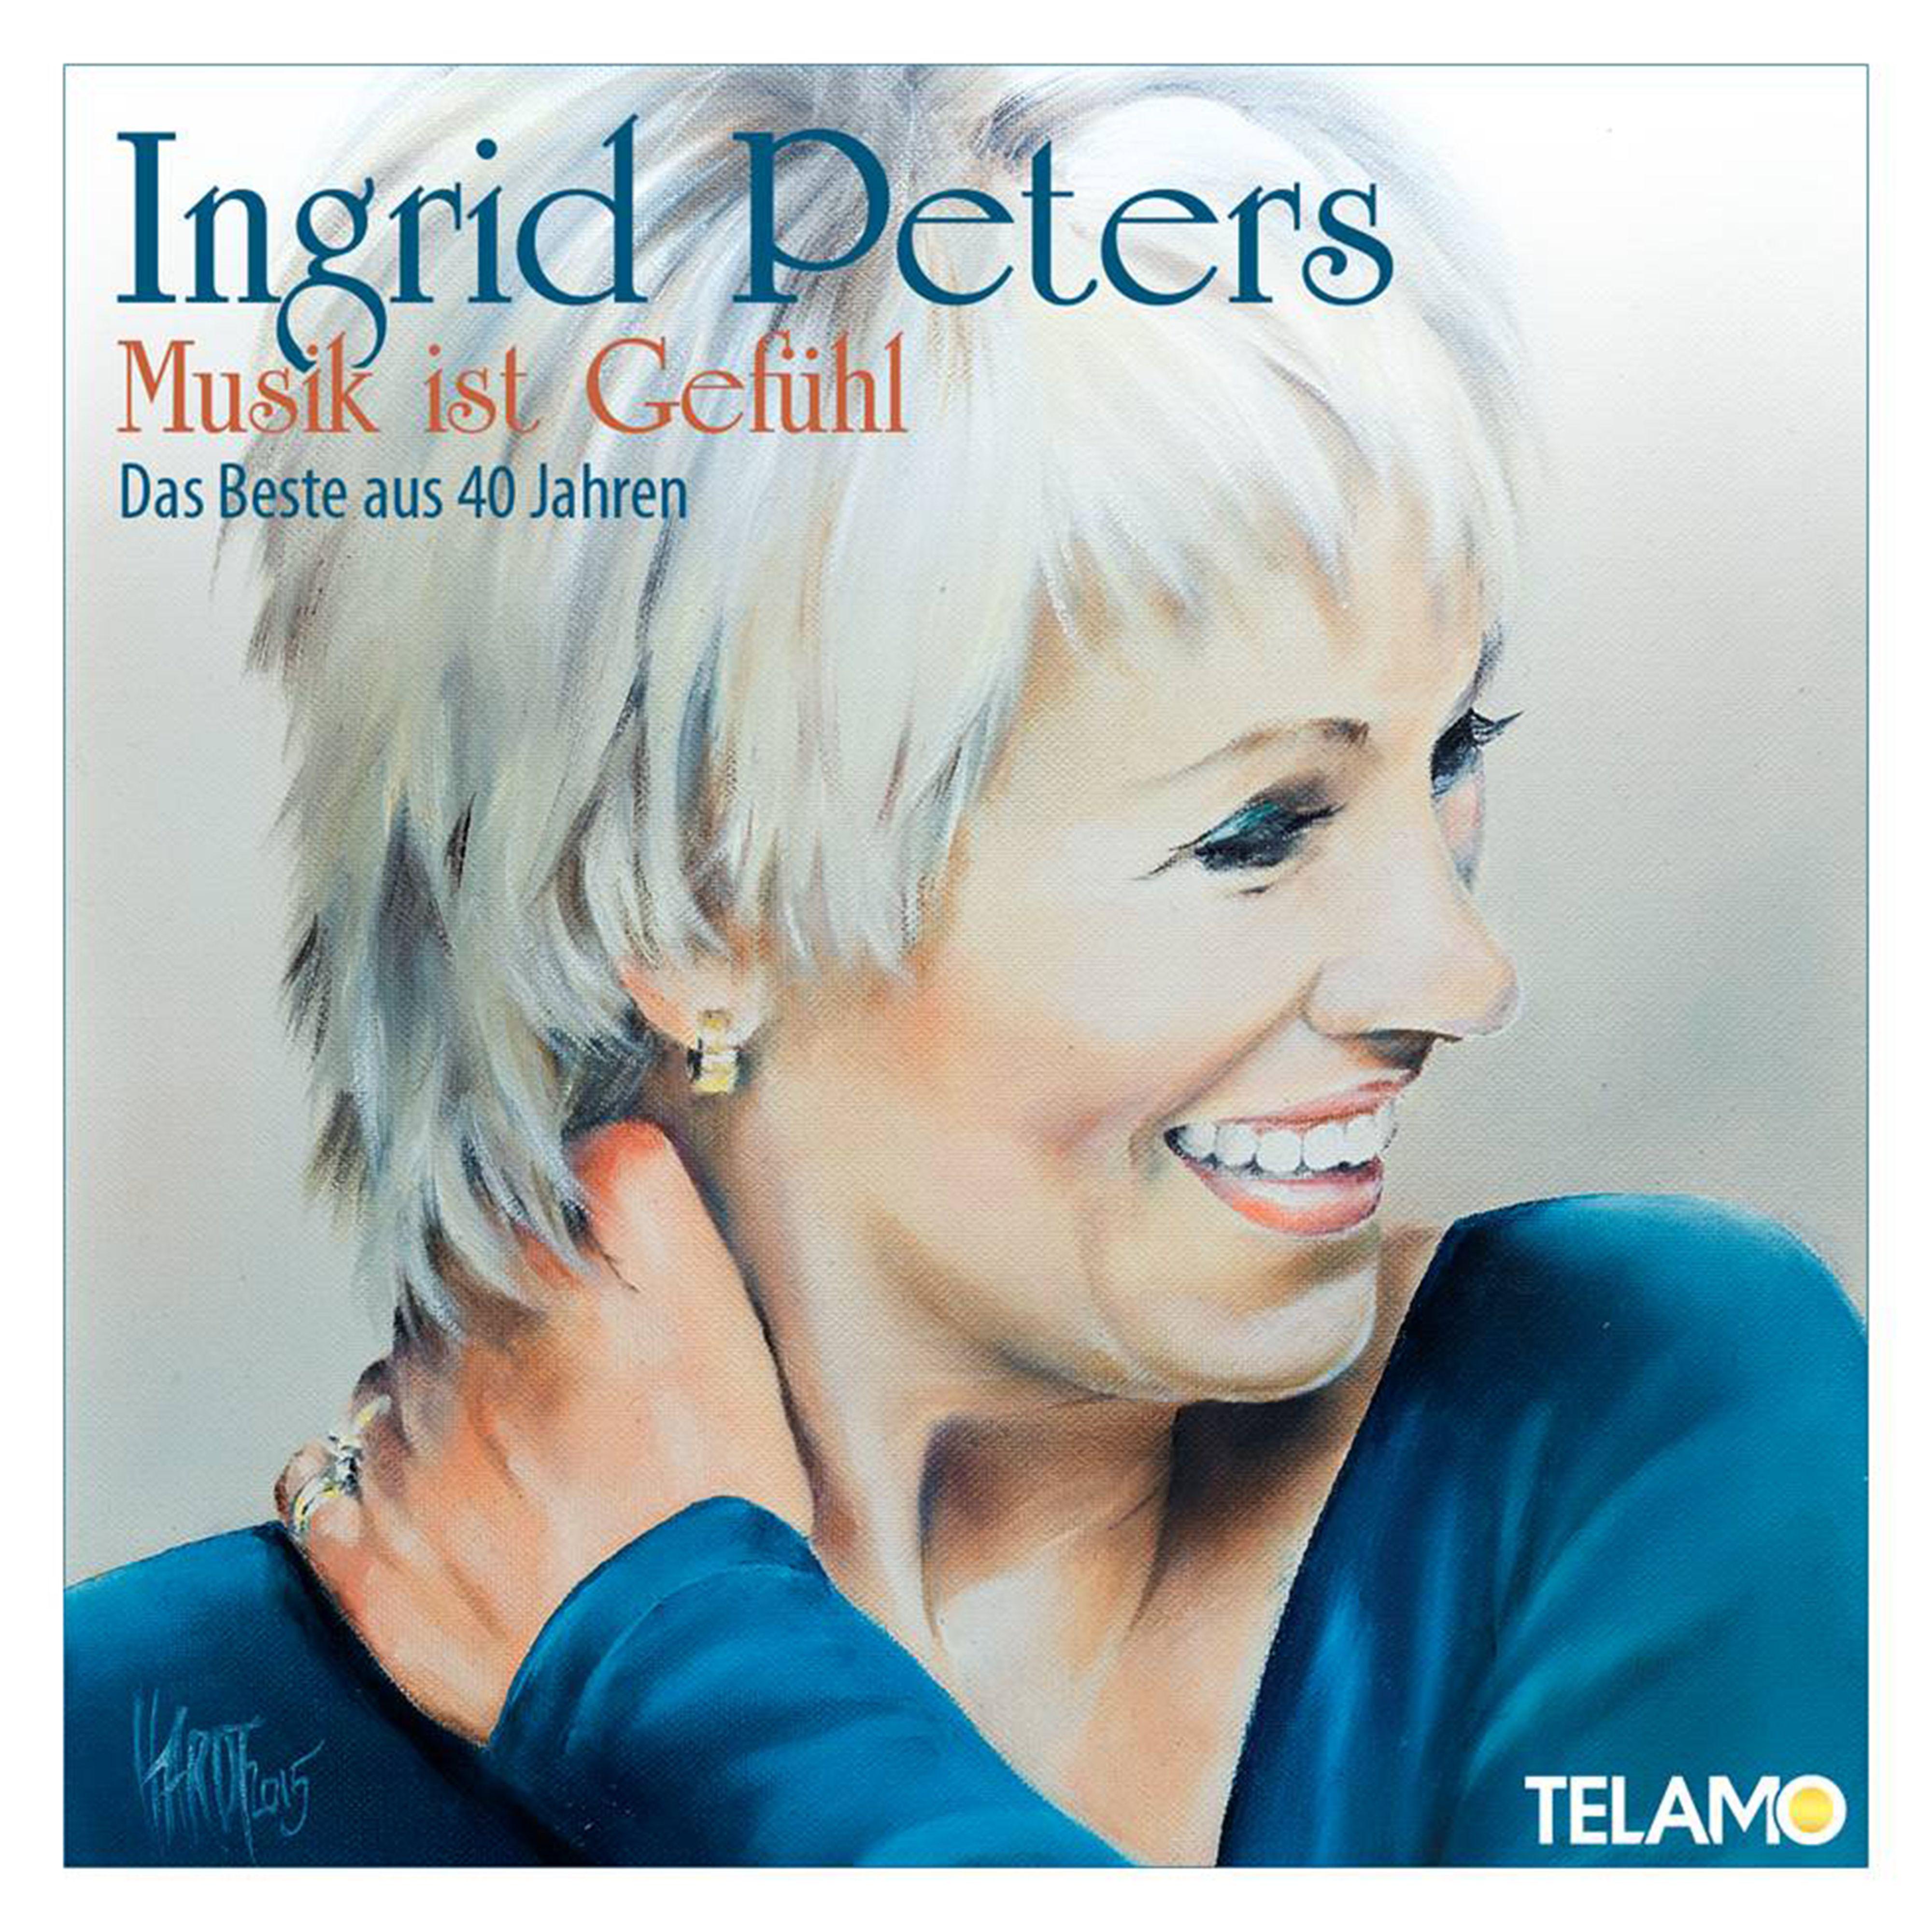 Ingrid Peters - Wenn die Nacht vorbei ist